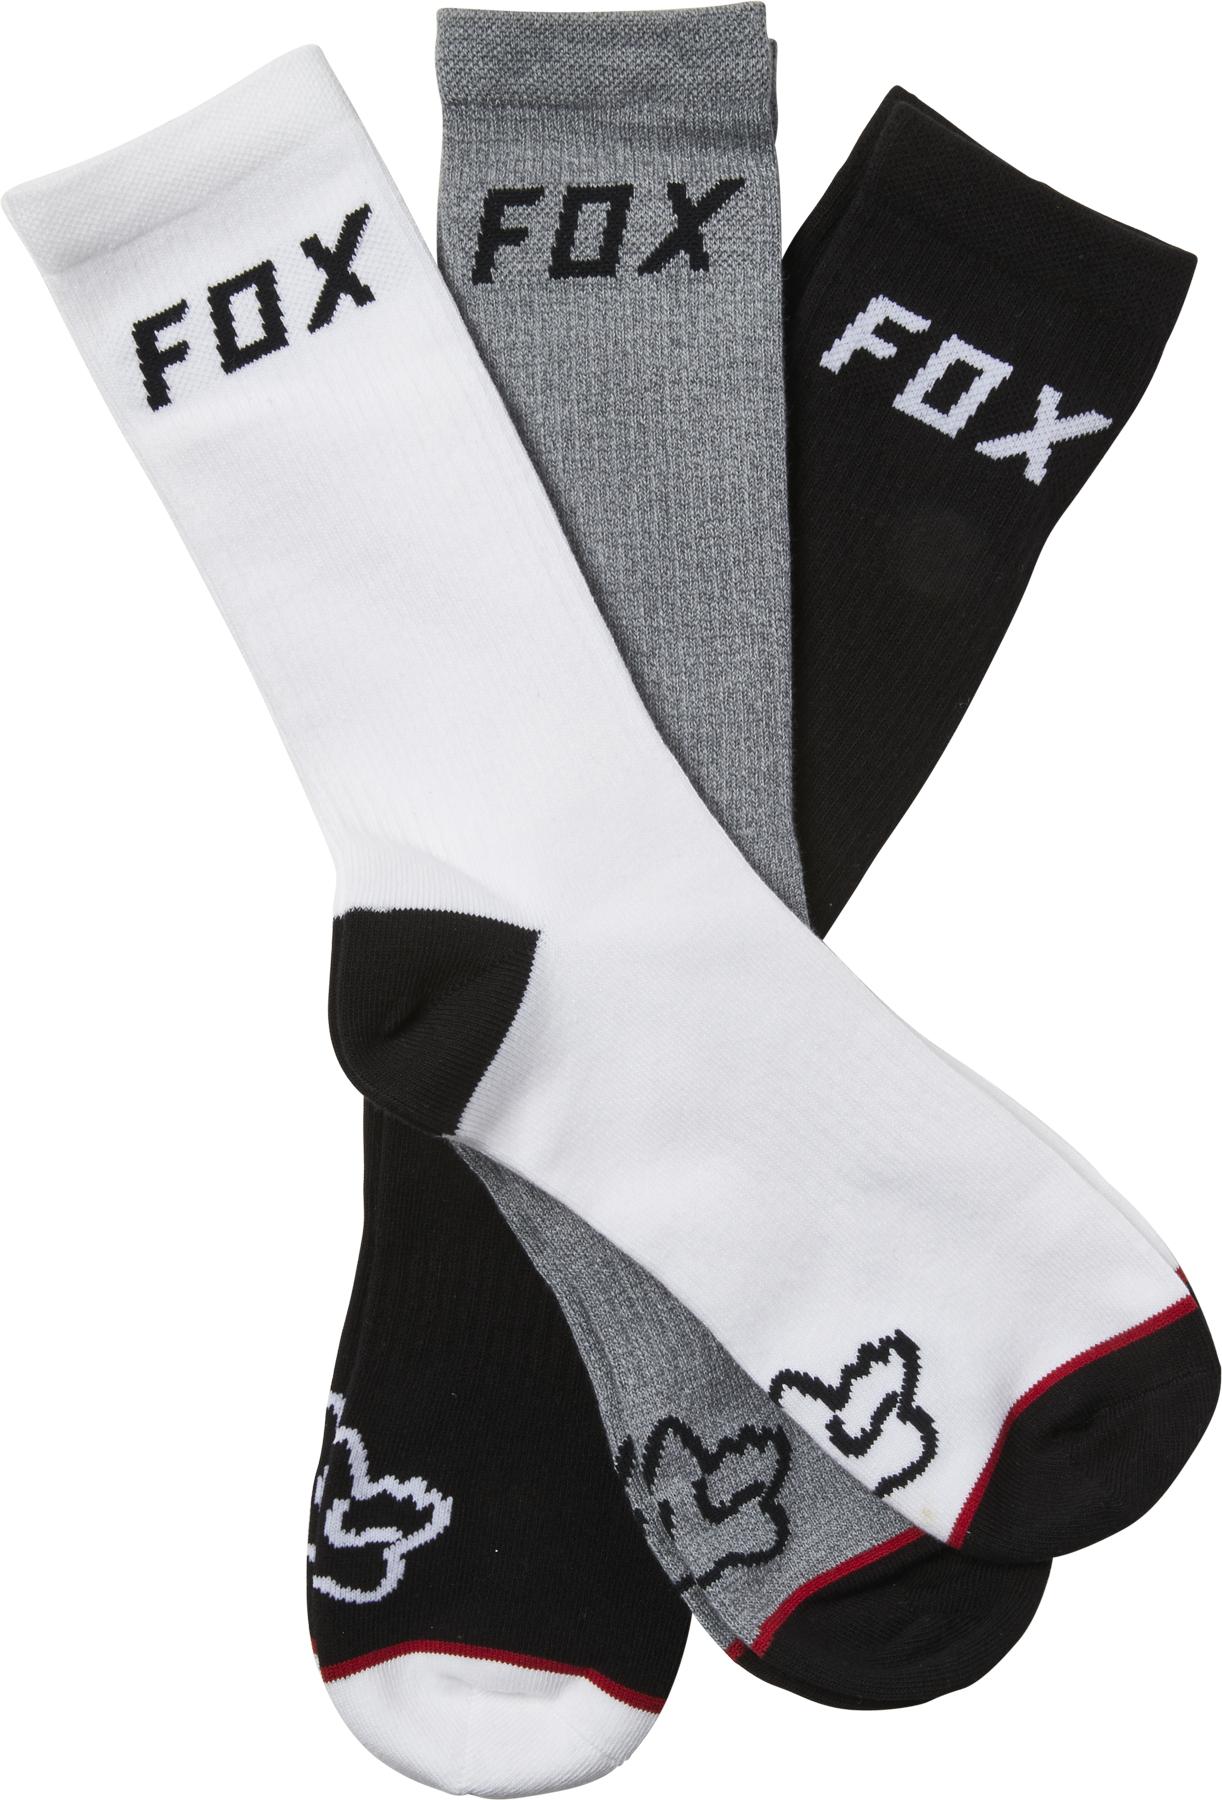 Fox Racing Fheadx Crew Sock 3 Pack  Assorted